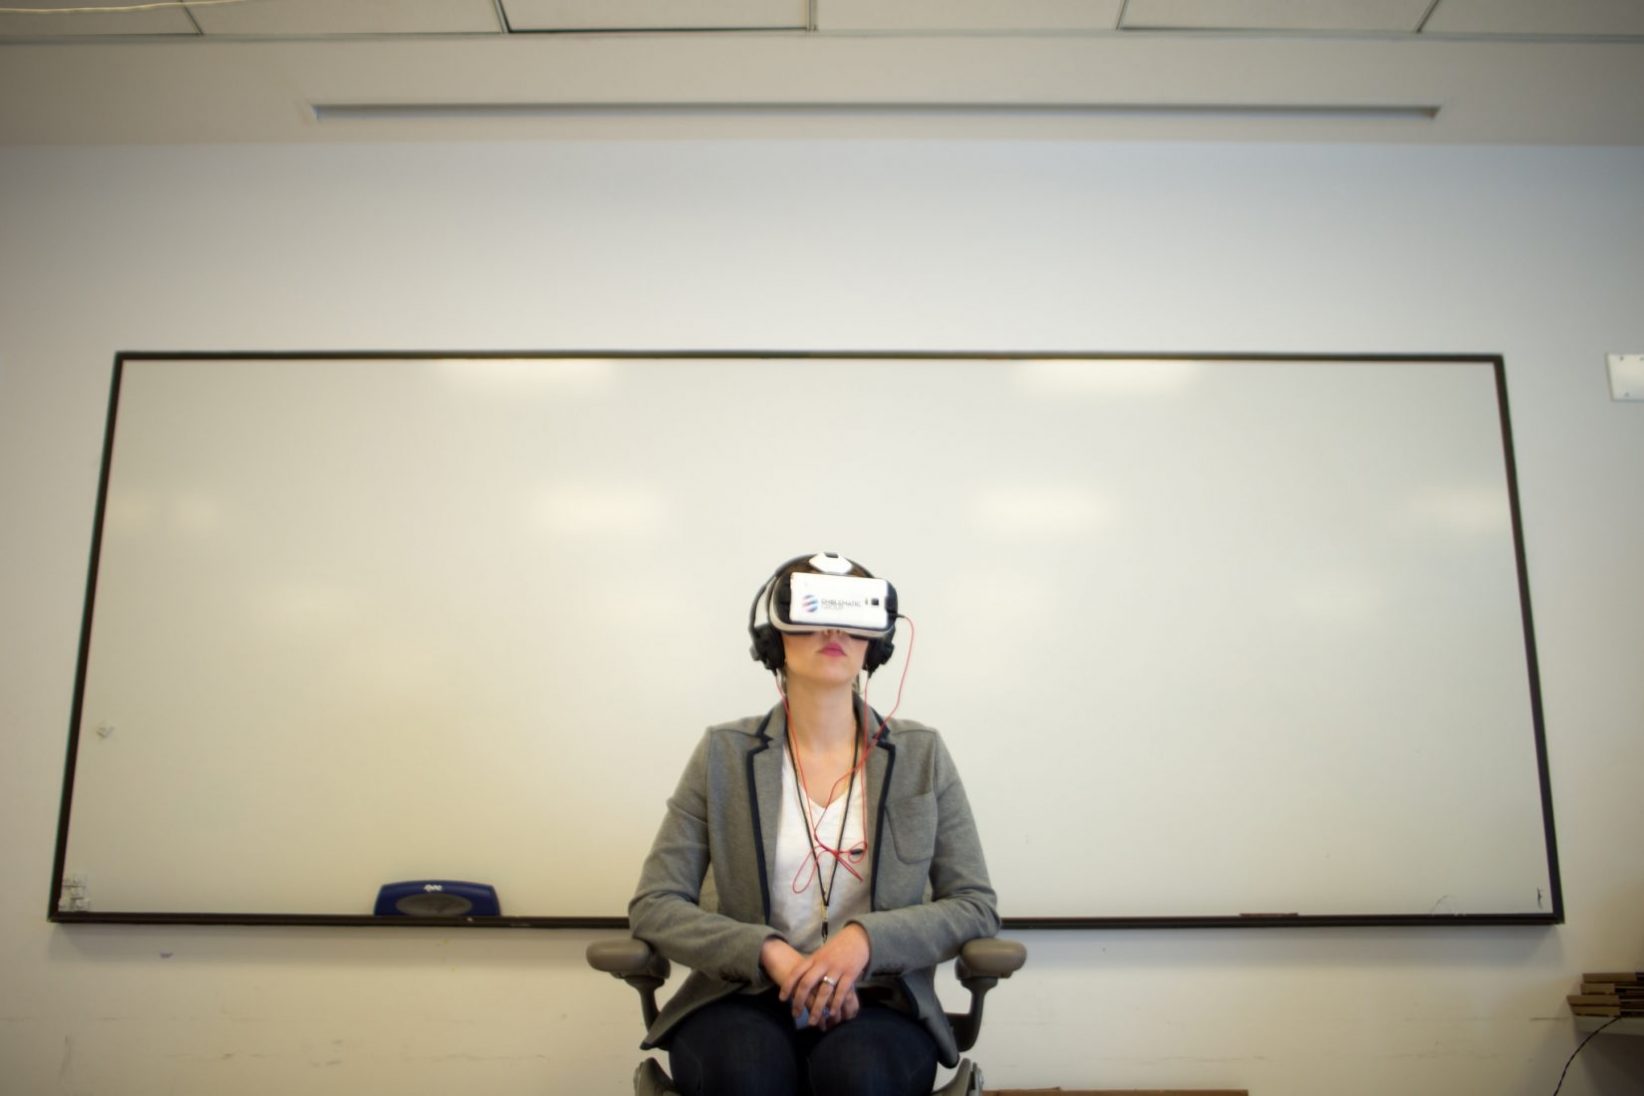 Virtual reality hackathon to visualize next-generation ed tech tools